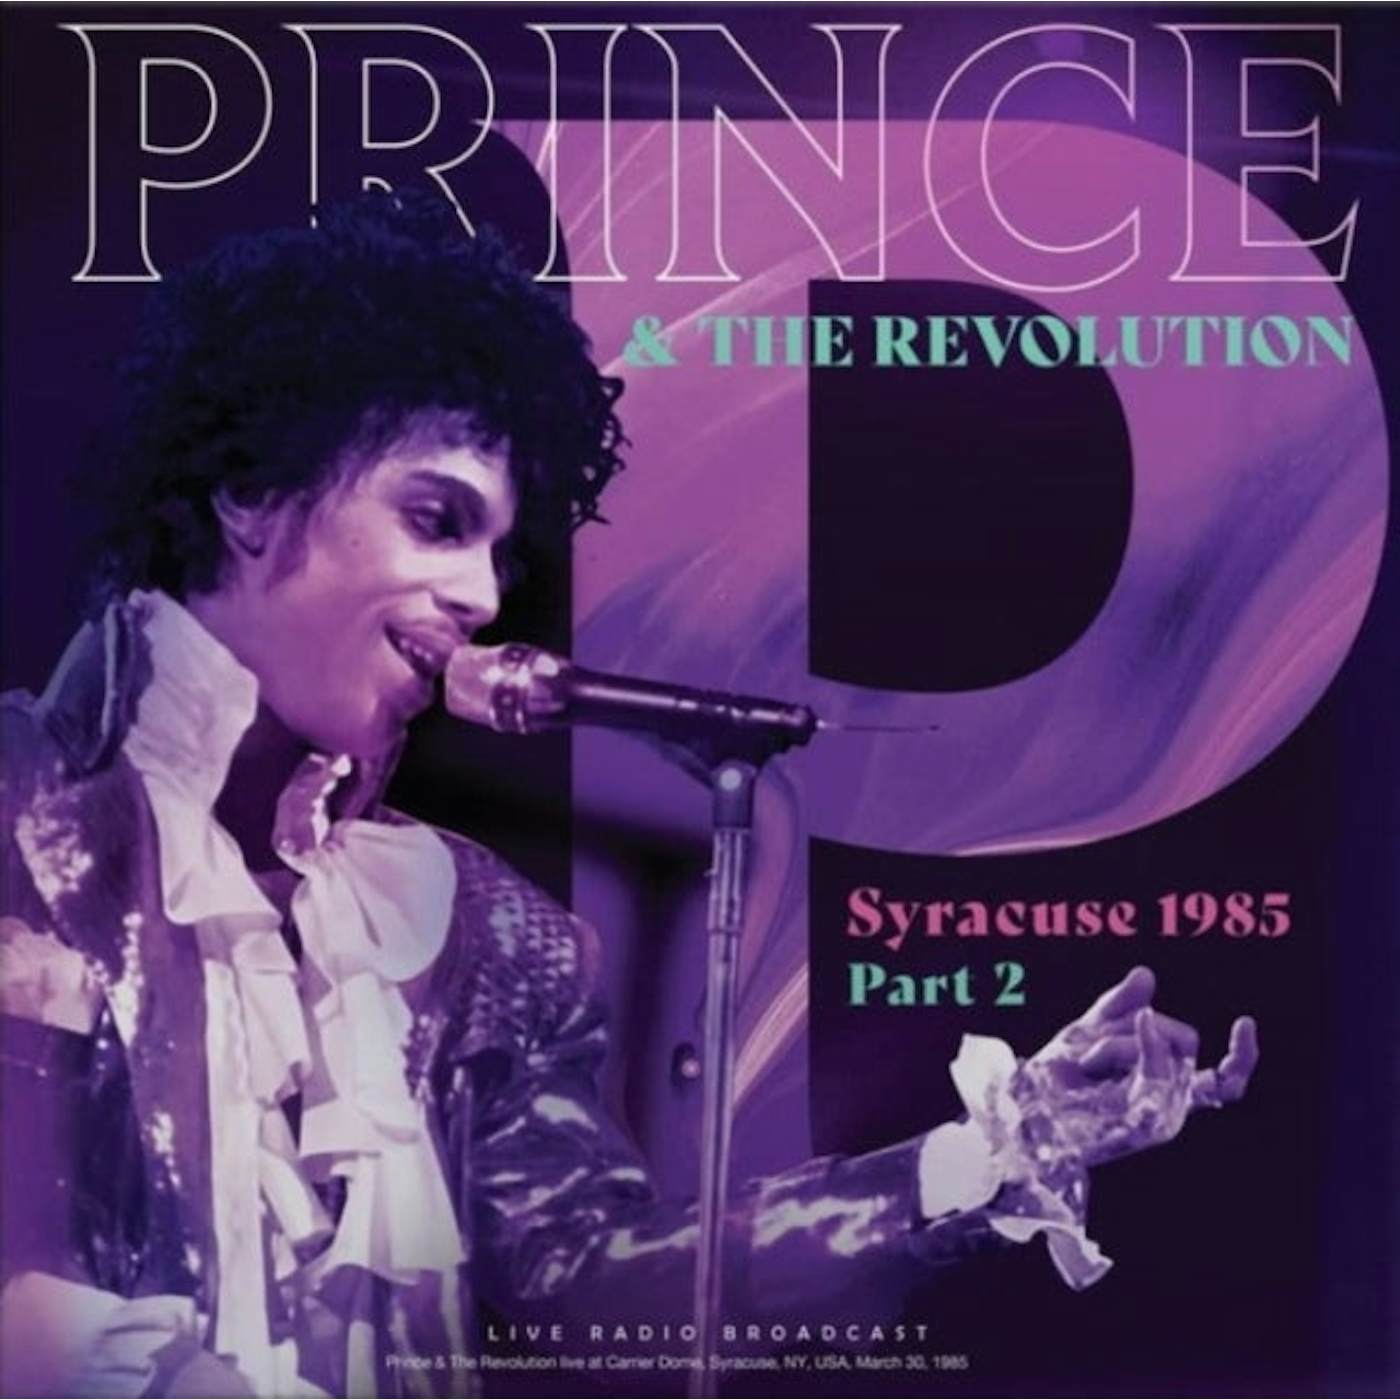 Prince & The Revolution LP - Syracuse 1985 Part 2 (Vinyl)